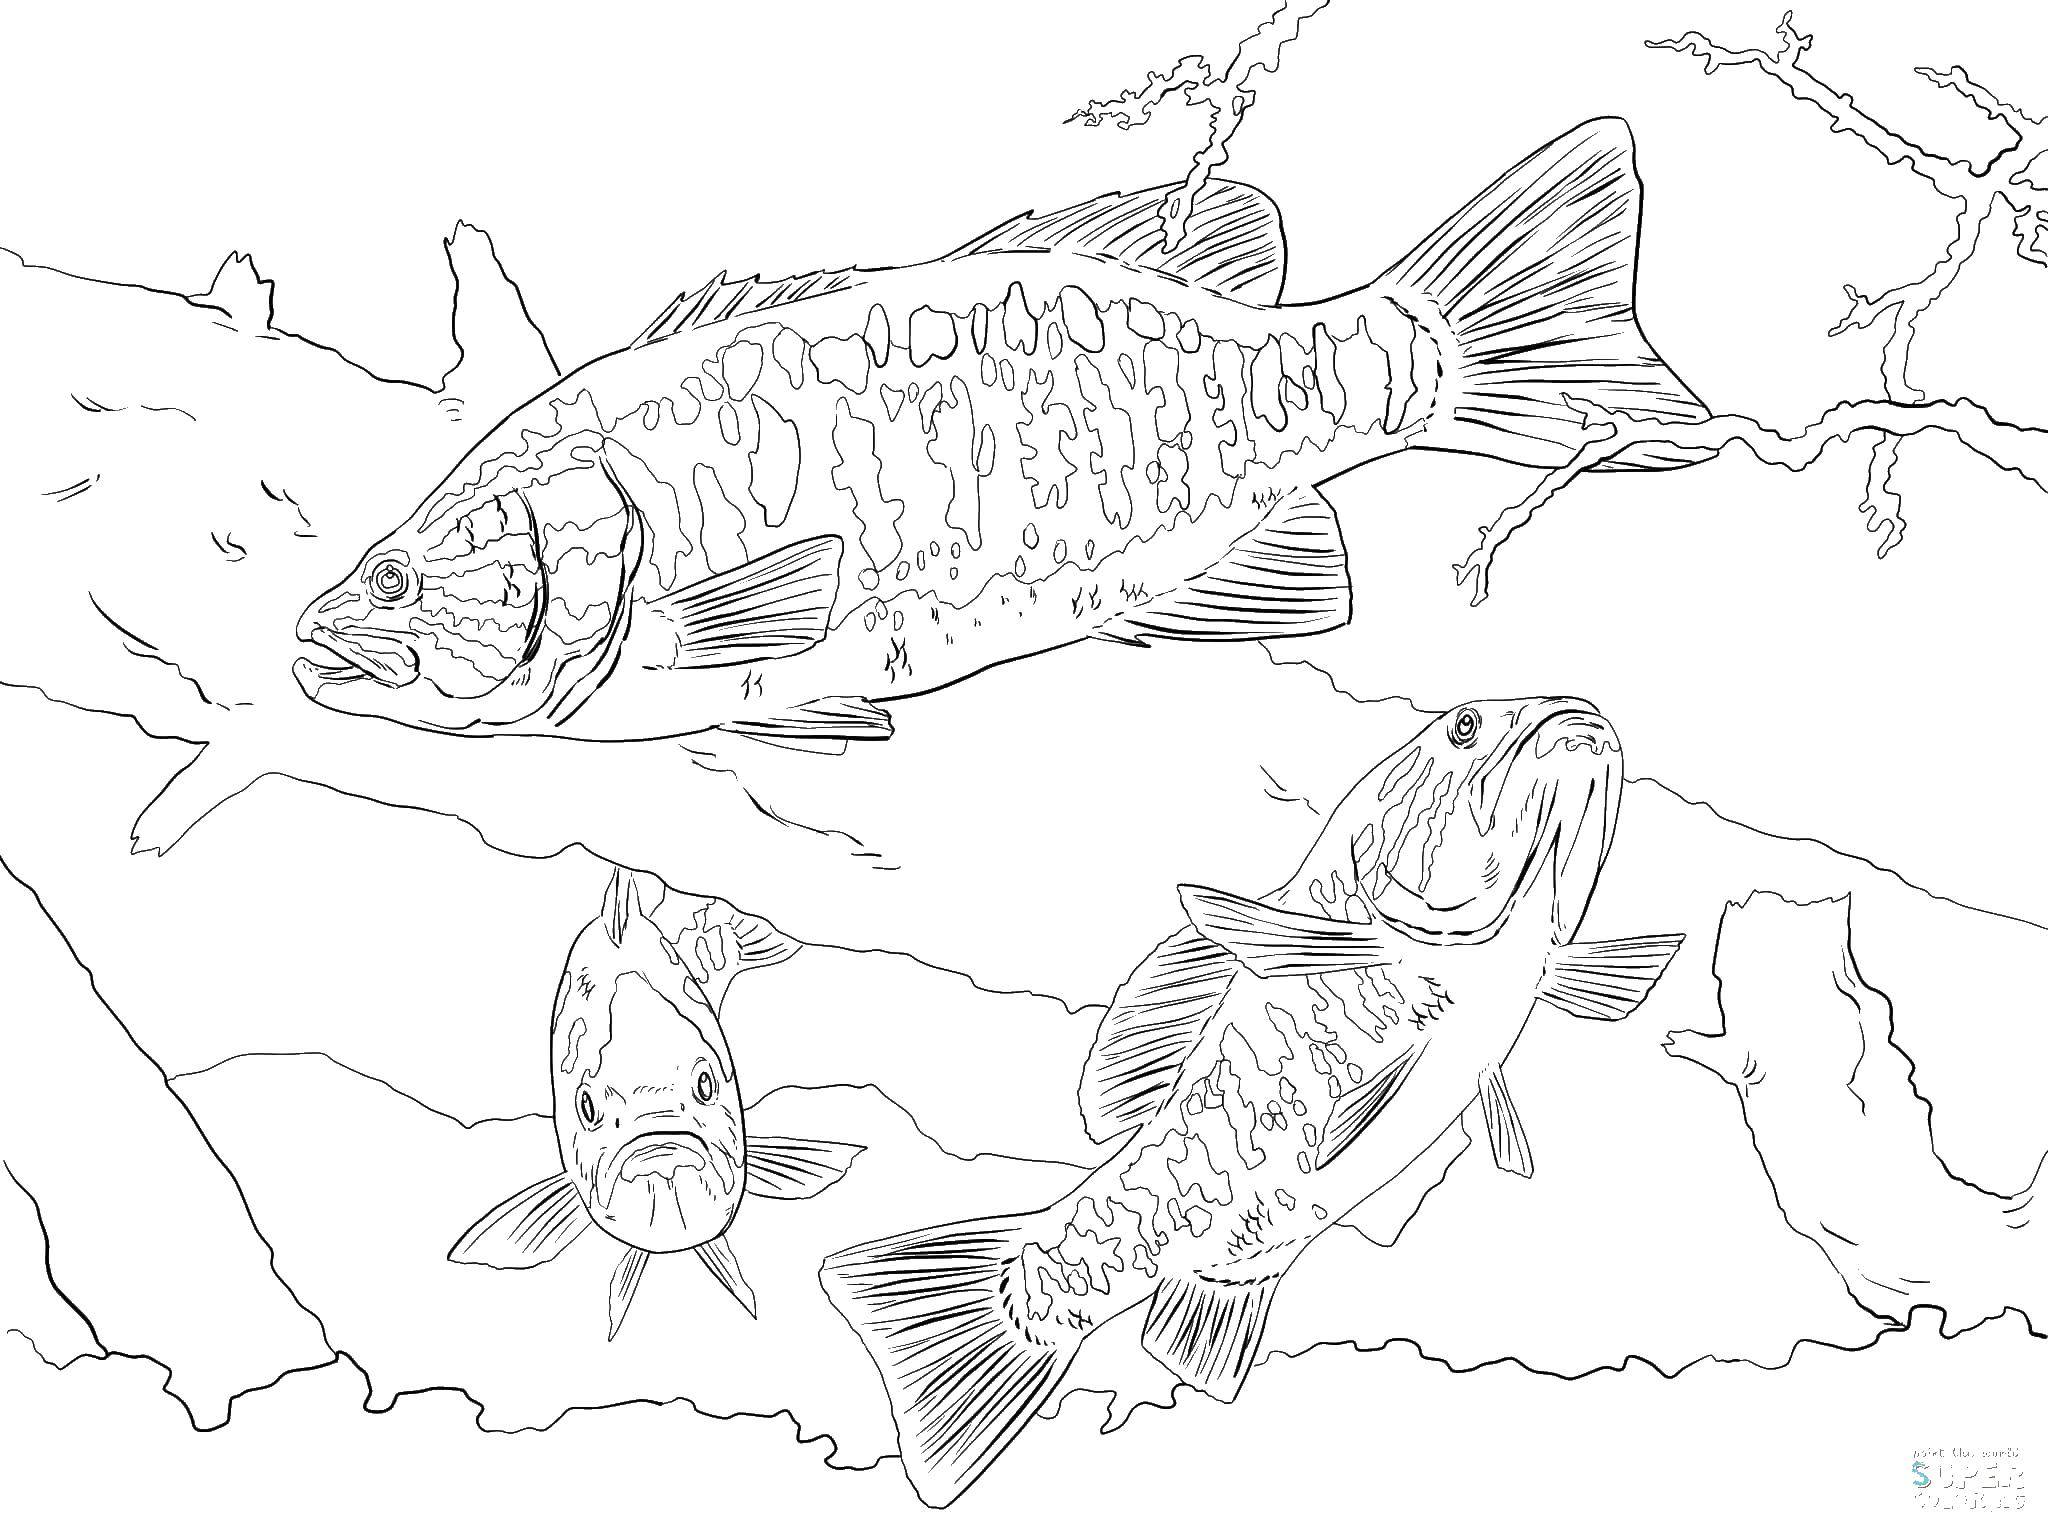 Coloring Floating fish. Category fish. Tags:  marine life, fish, water.